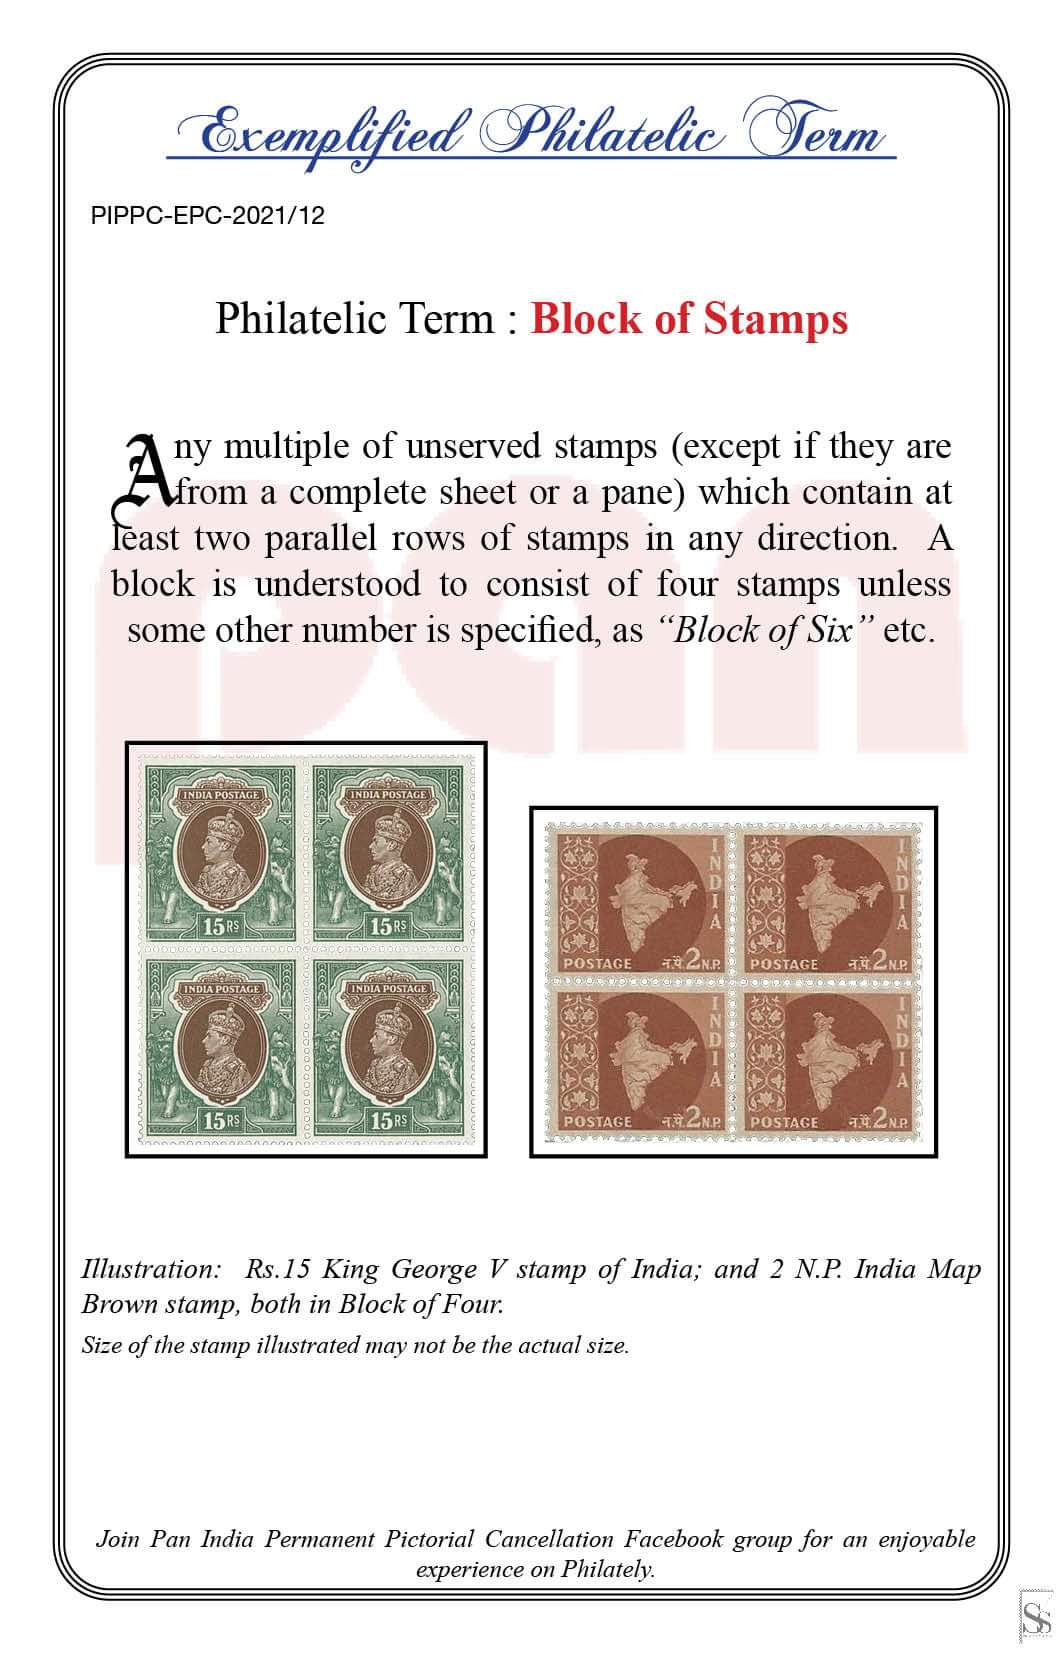 12. Today's exemplified philatelic term- Block of stamps